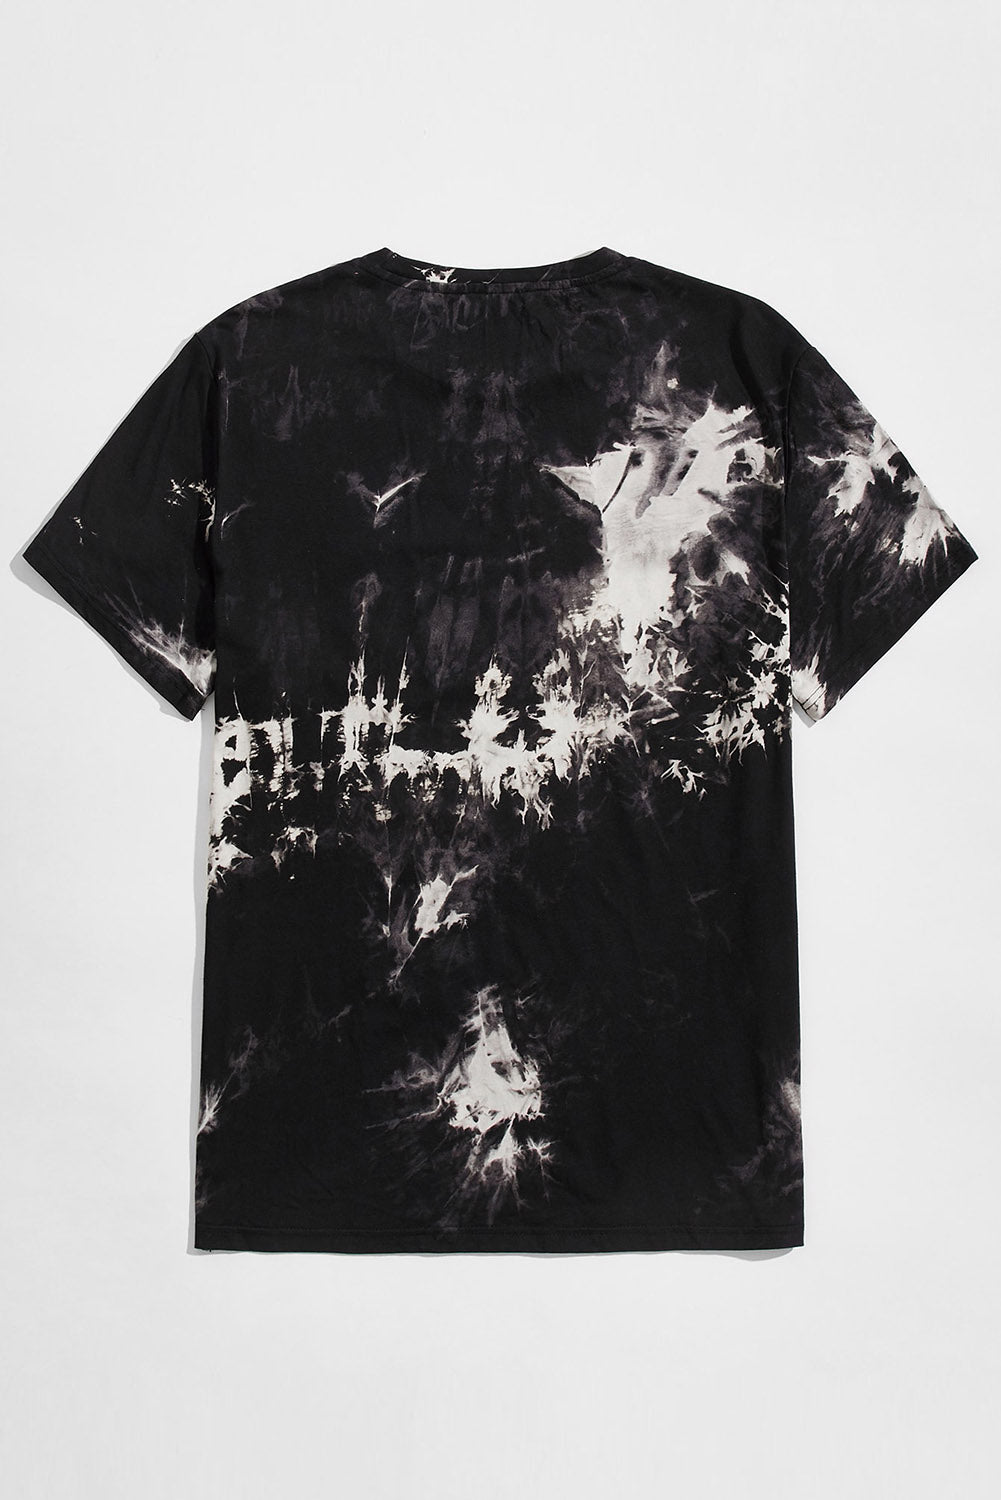 Black BROOKLYN Tie Dyed Print Short Sleeve Men's T-shirt Men's Tops JT's Designer Fashion